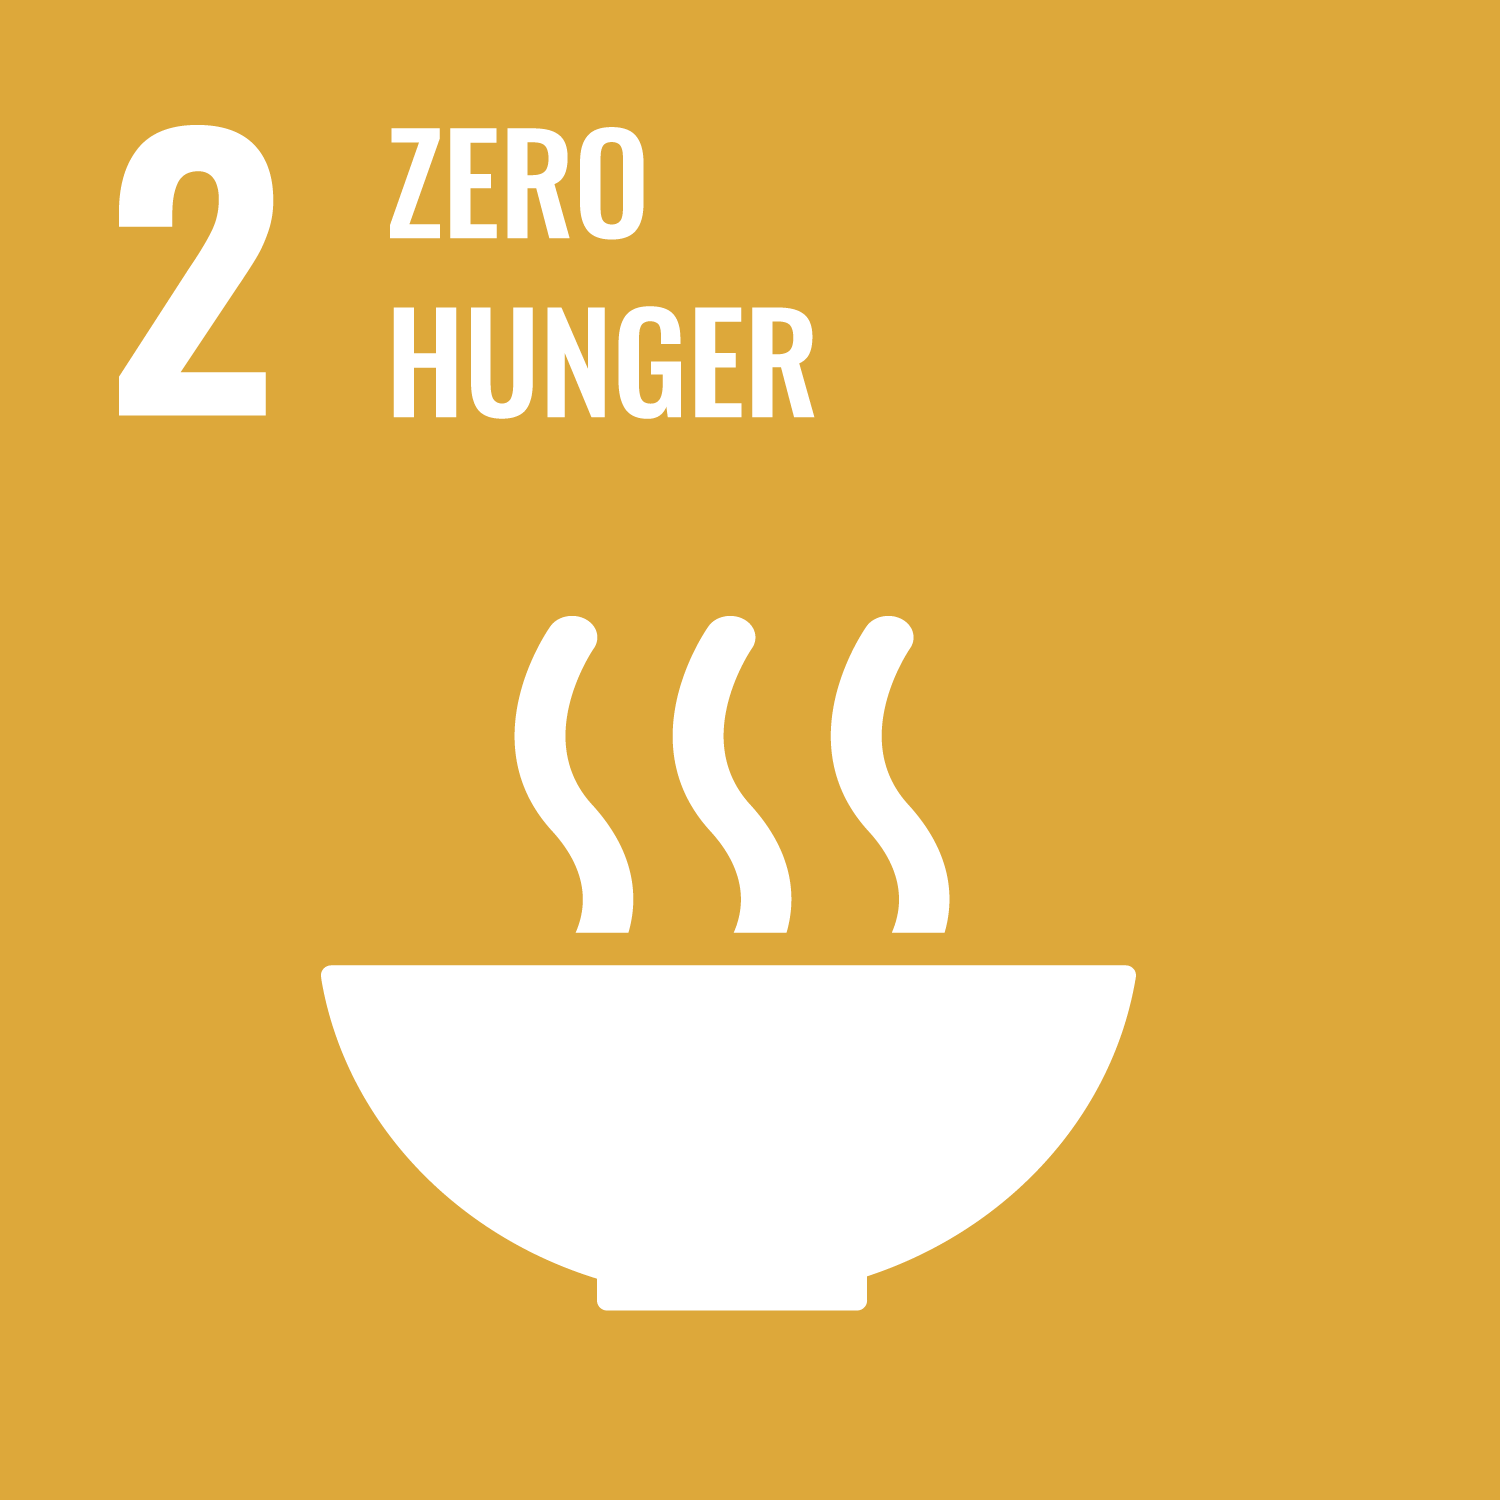 United Nation's 17 Sustainable Development Goals: Goal Number 2: Zero Hunger